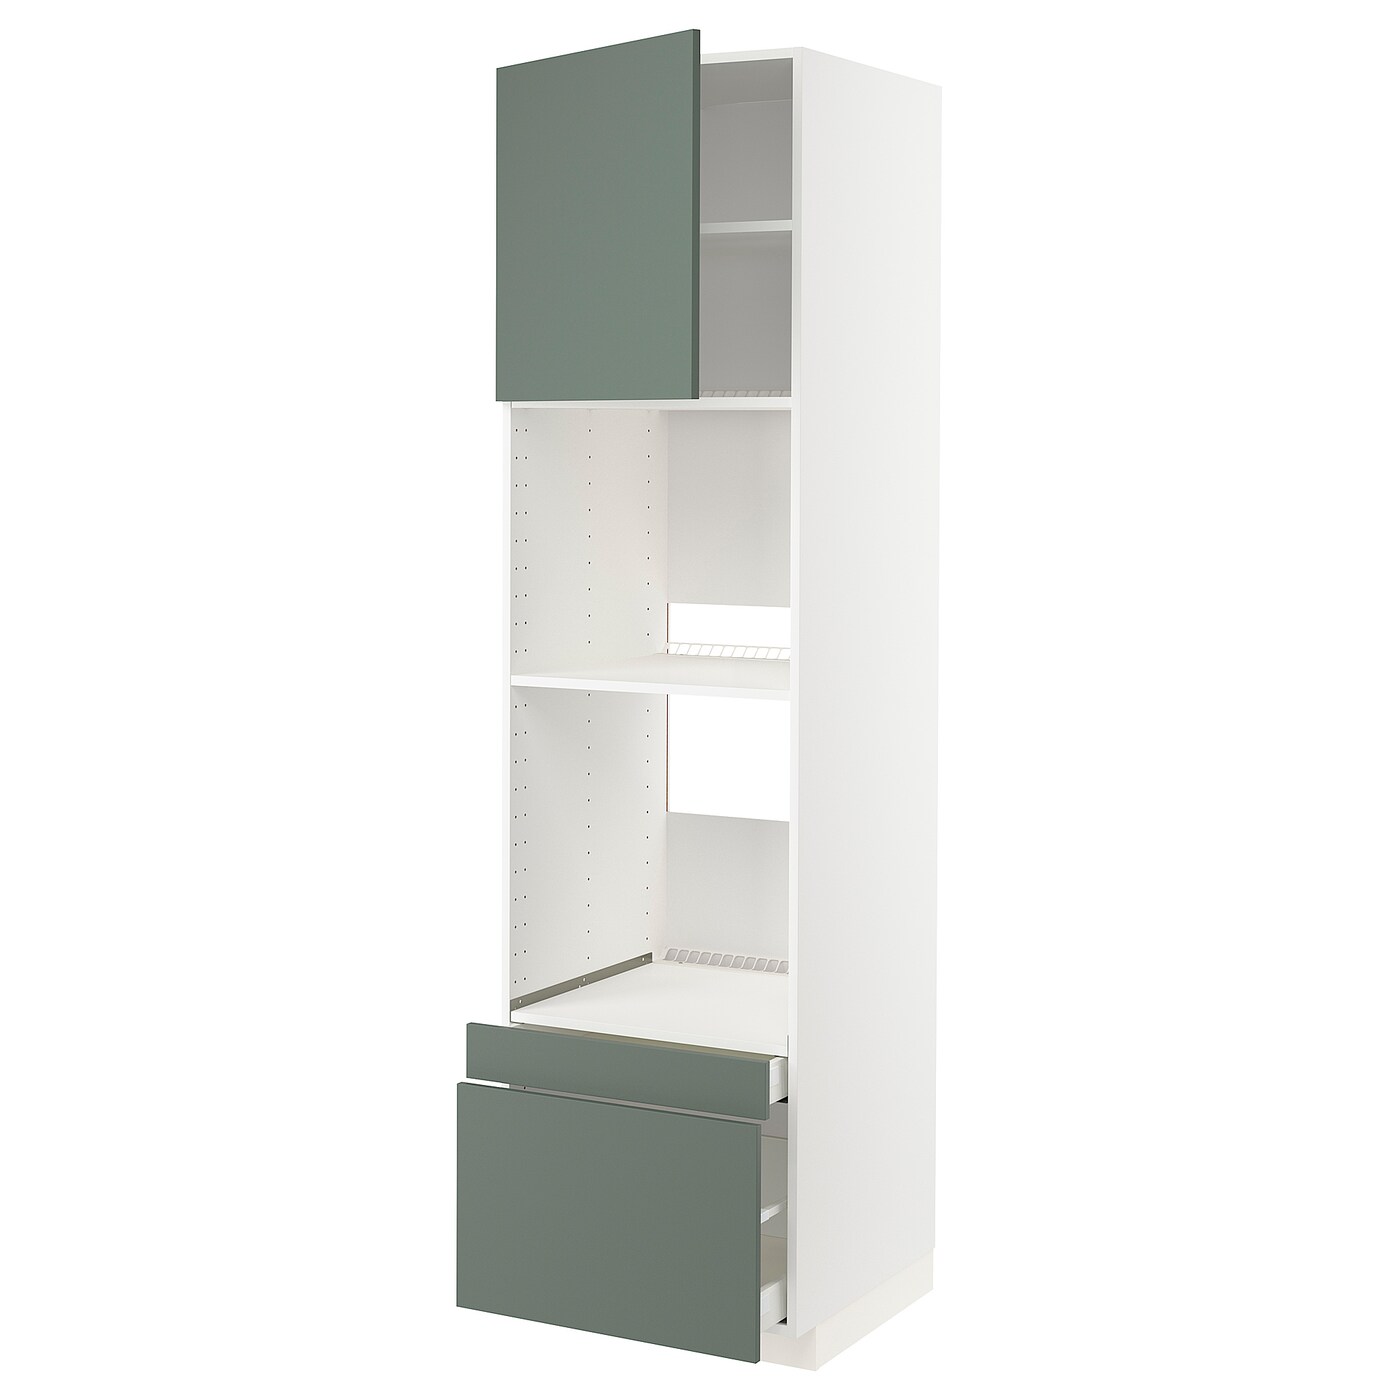 Модульный шкаф - METOD / MAXIMERA IKEA/ МЕТОД / МАКСИМЕРА ИКЕА, 228х60 см, зеленый/белый